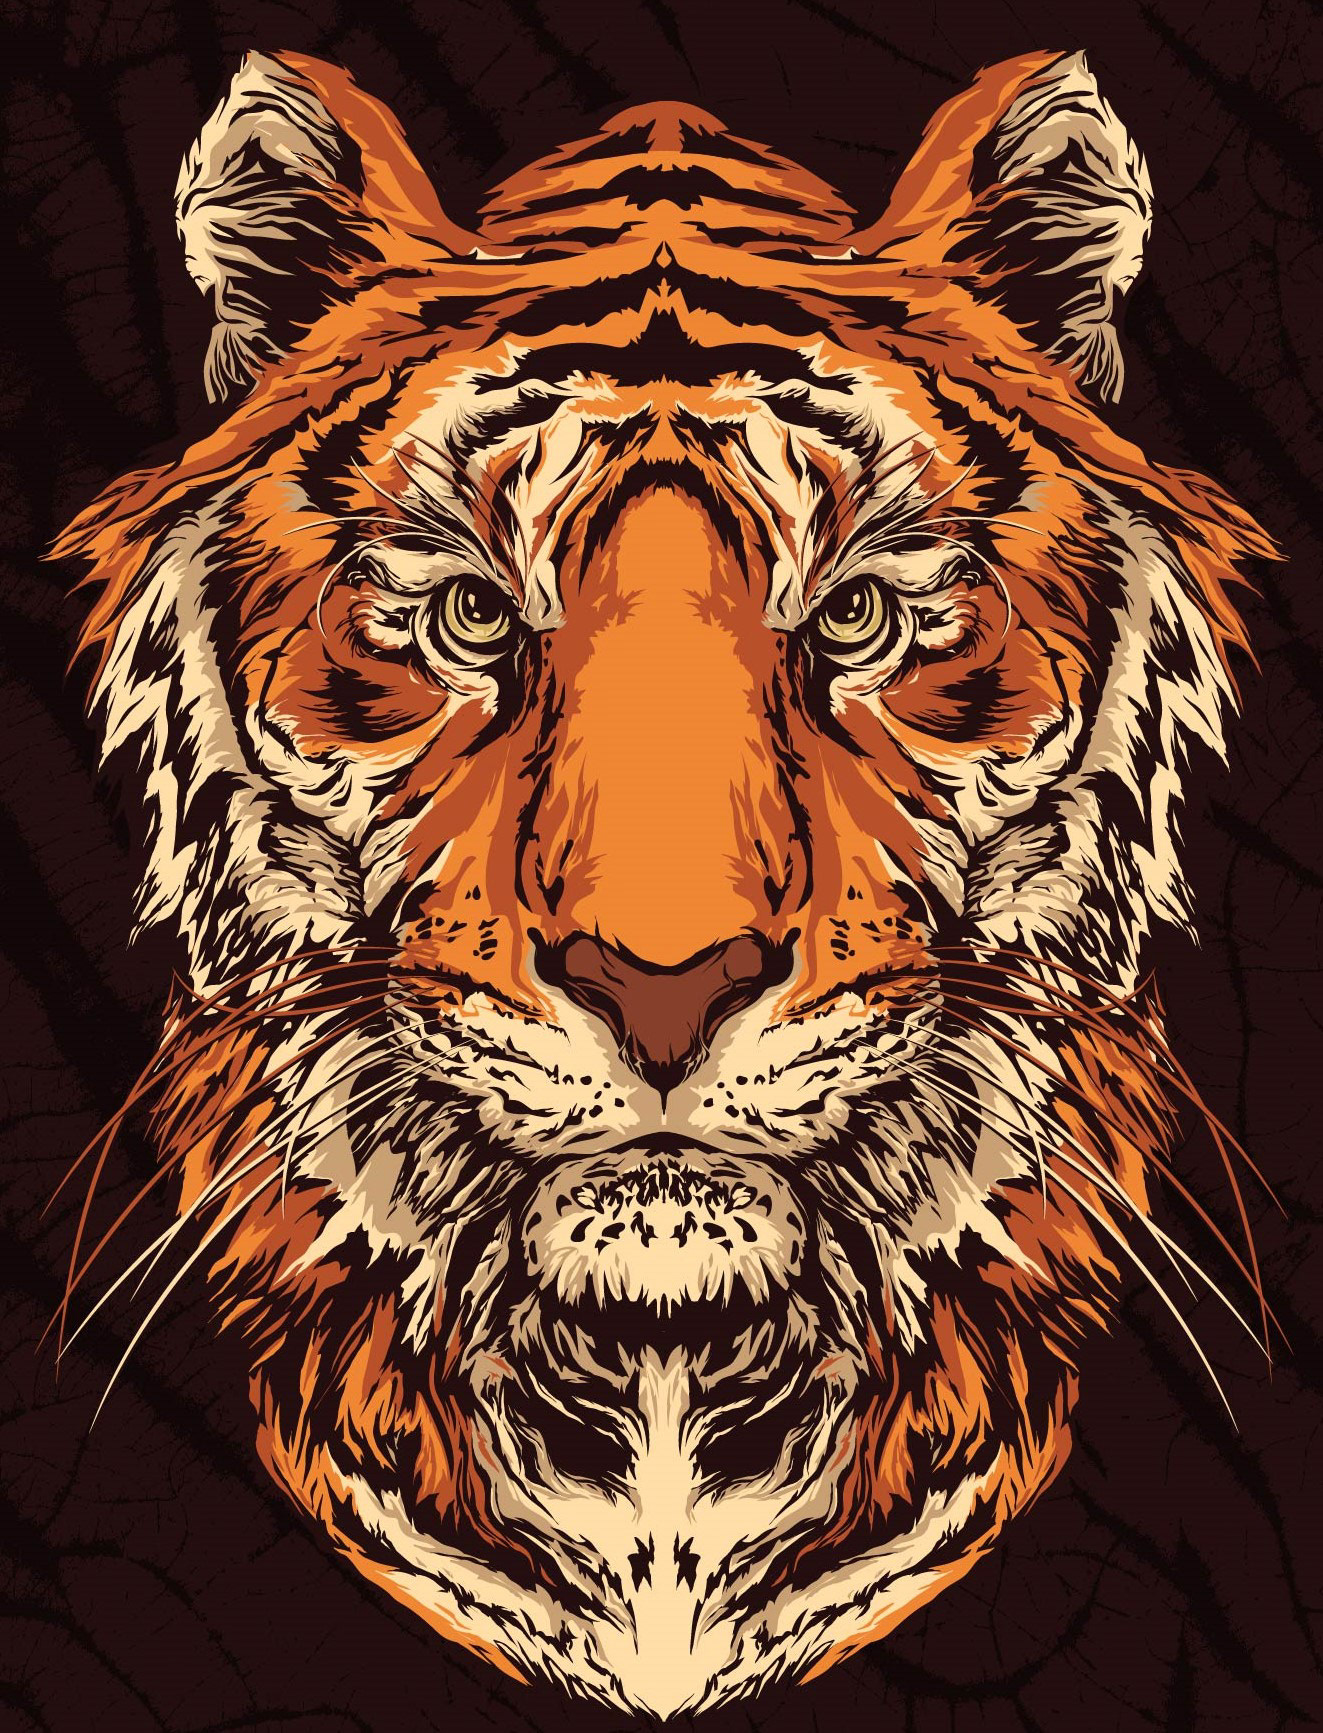 creative tiger t shirt design